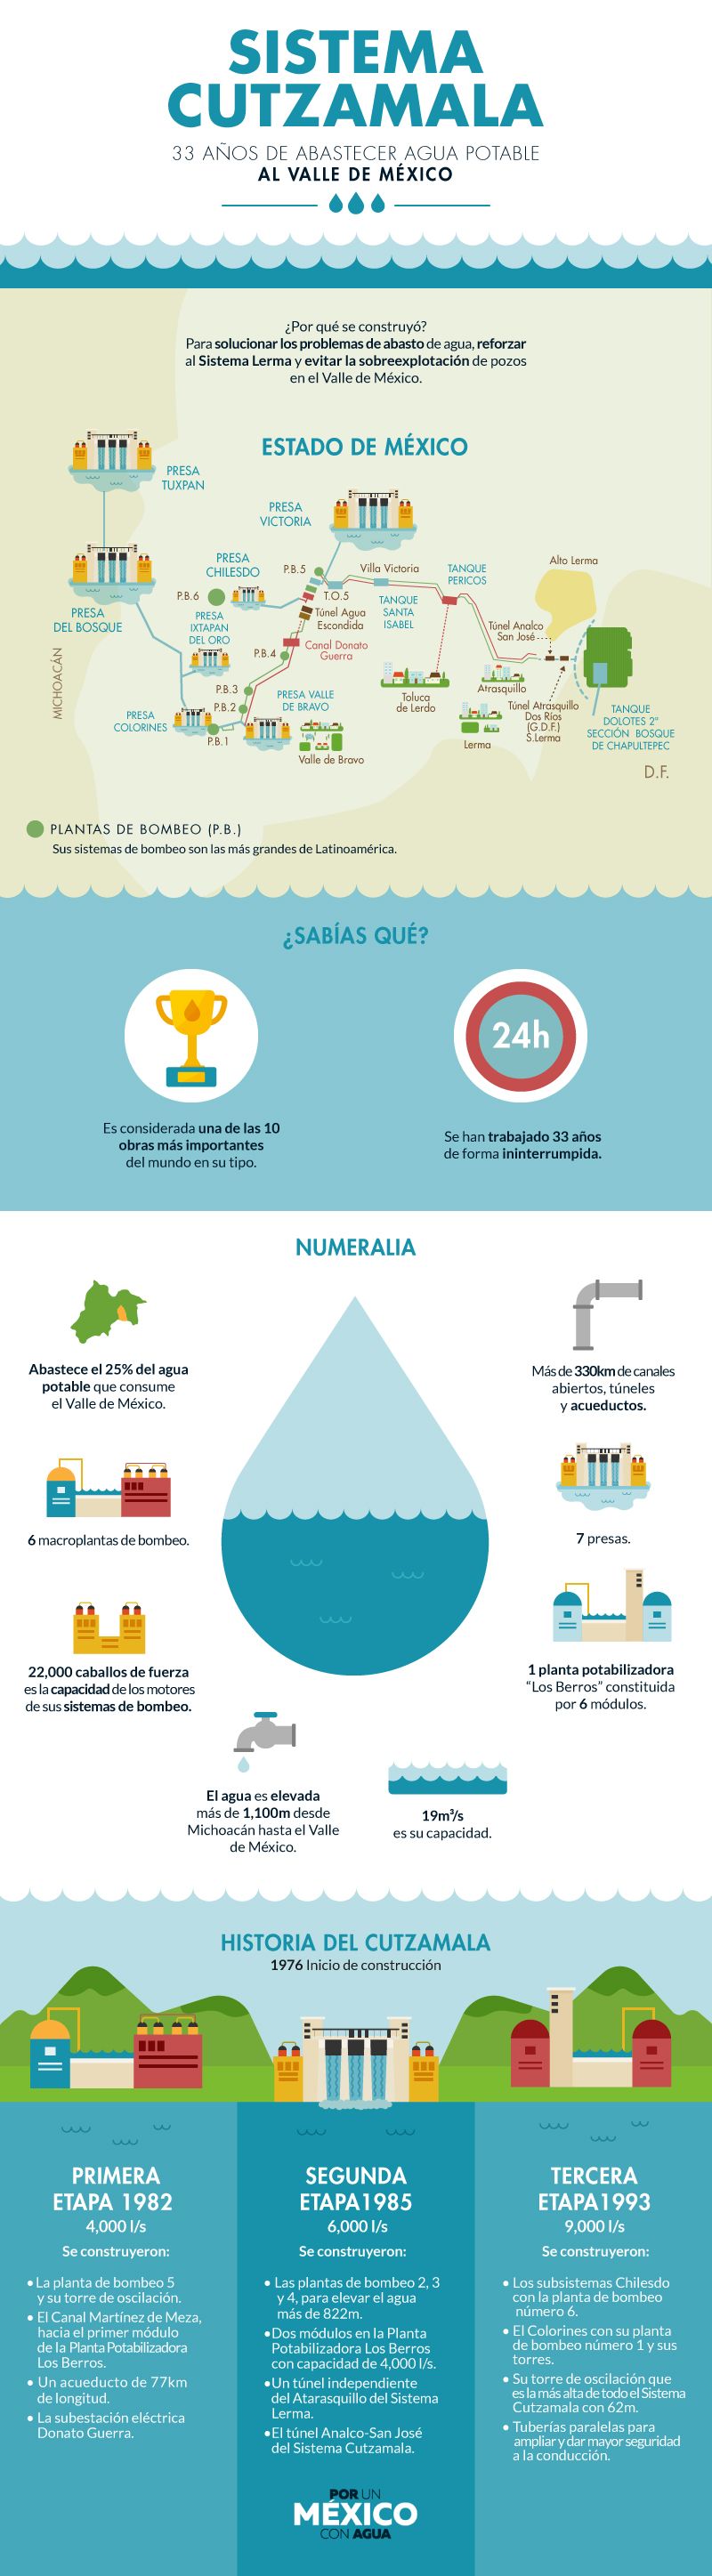 Sistema Cutzamala: 33 años de abastecer agua potable al valle de México